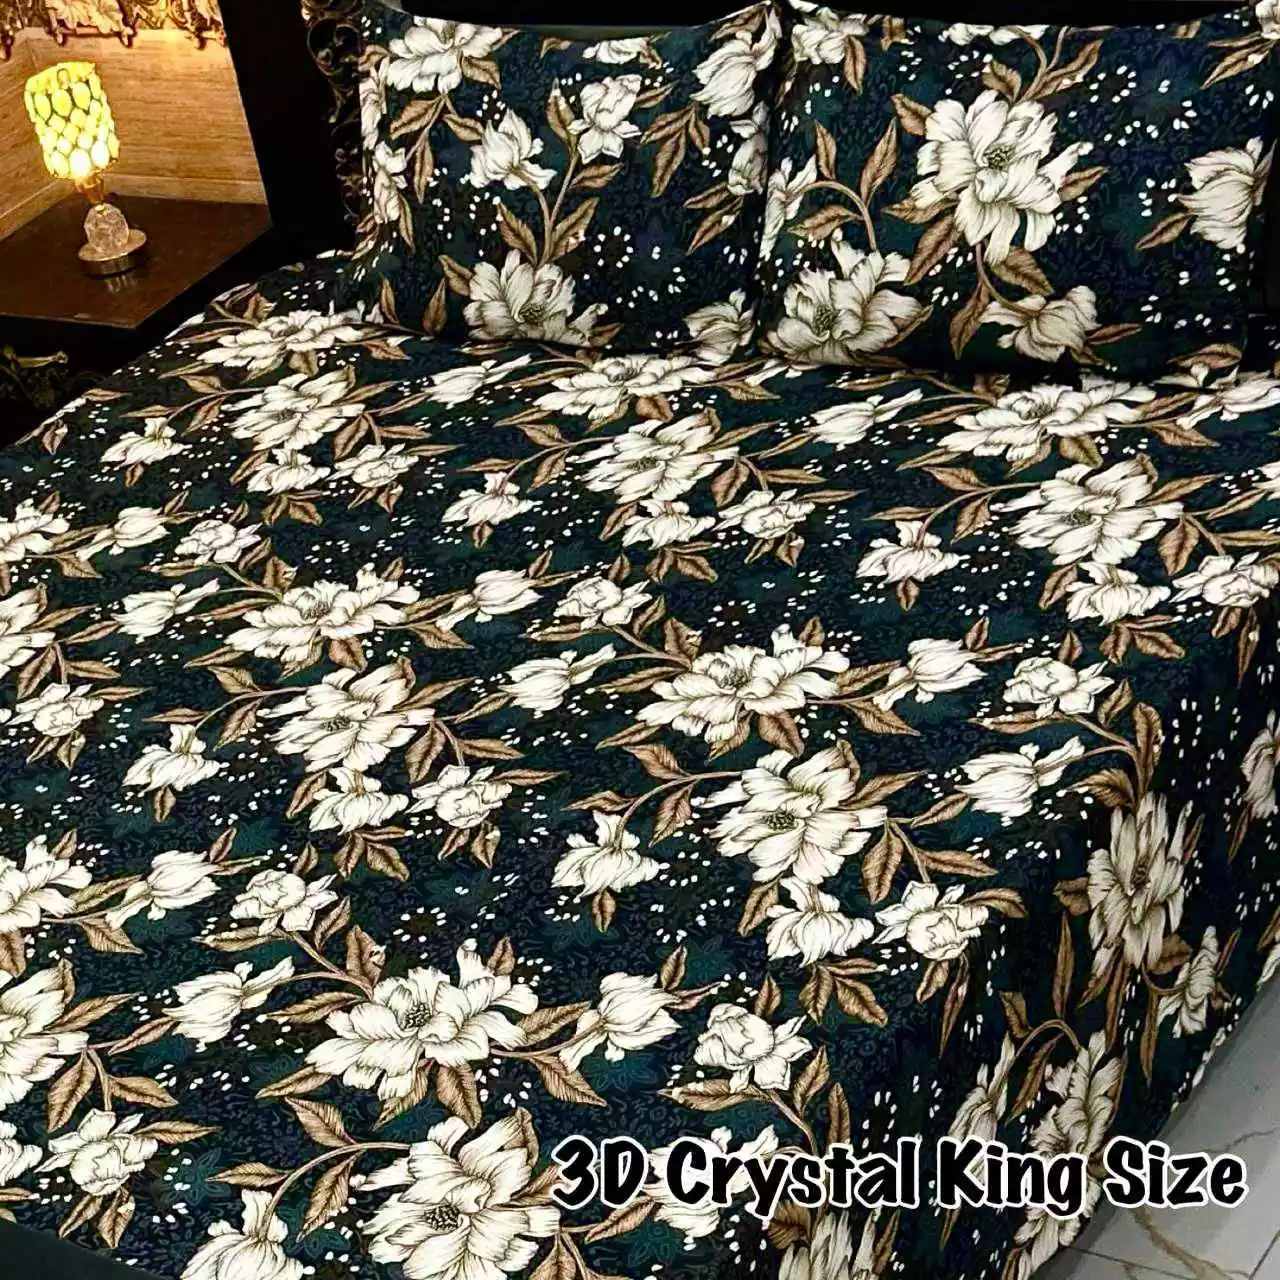 DF-CBSKS-2: DFY Bedding 3D Crystal Bed Sheet King Size